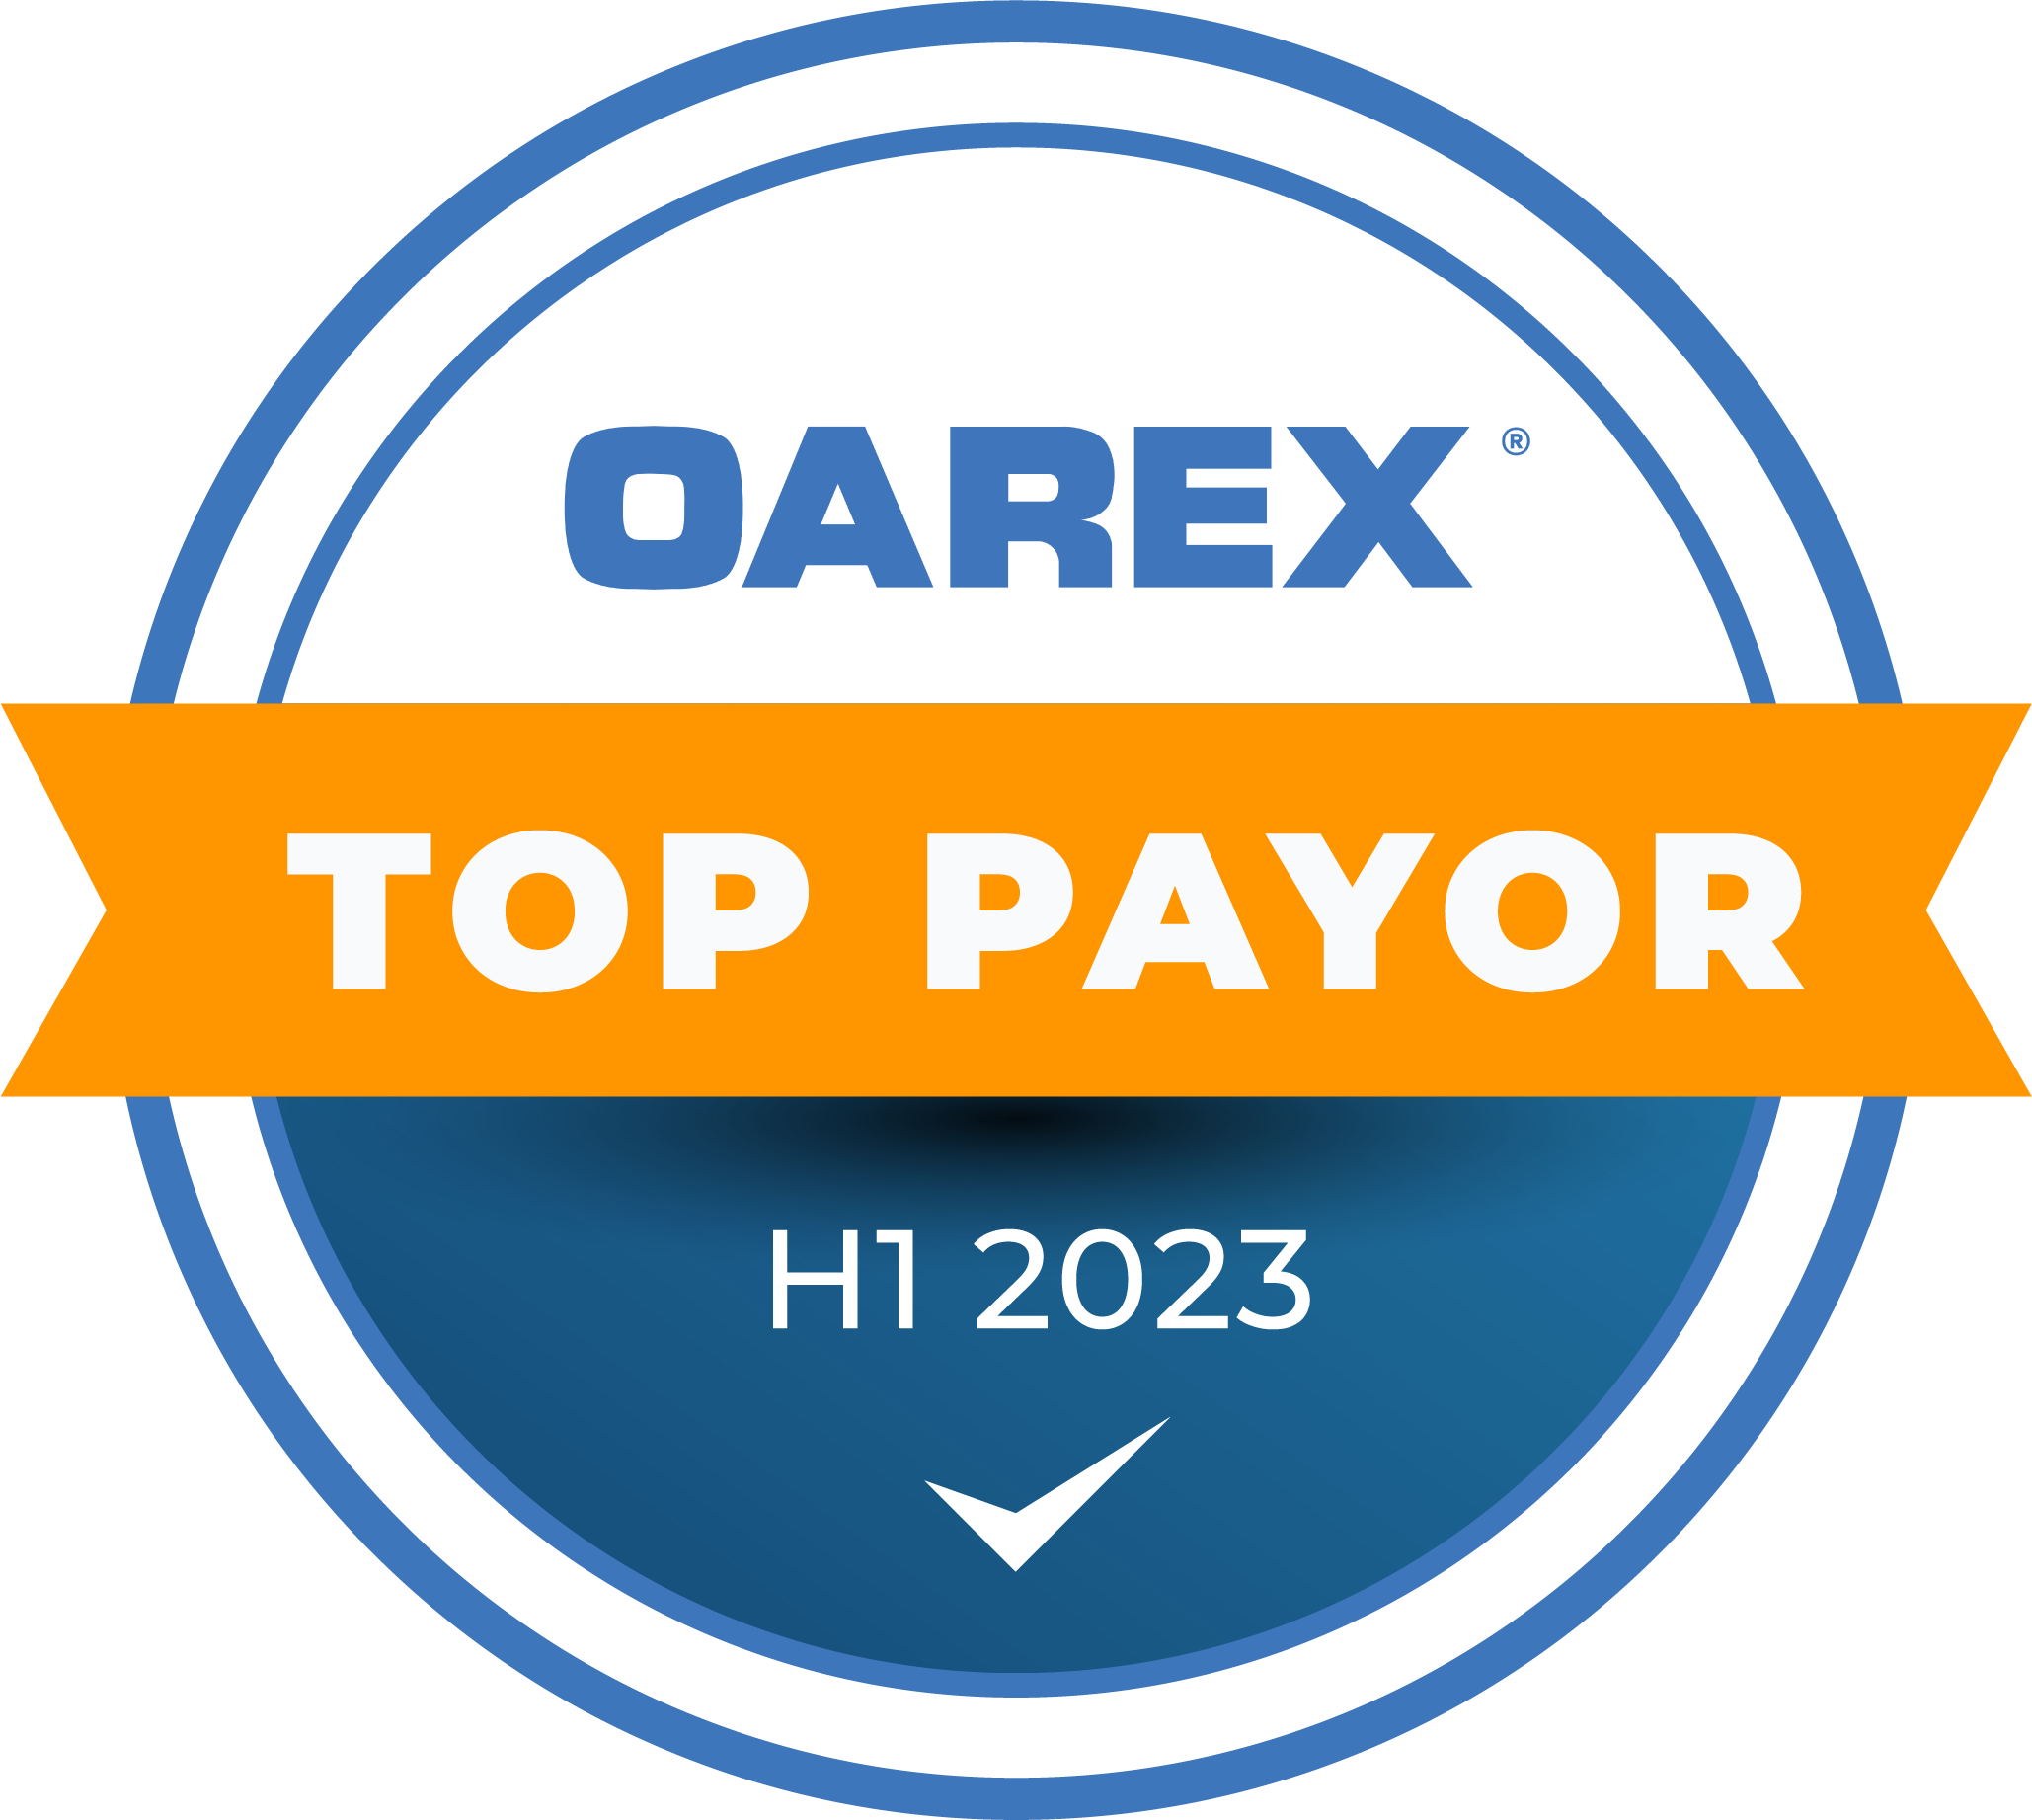 H1 2023 - OAREX Top Payor